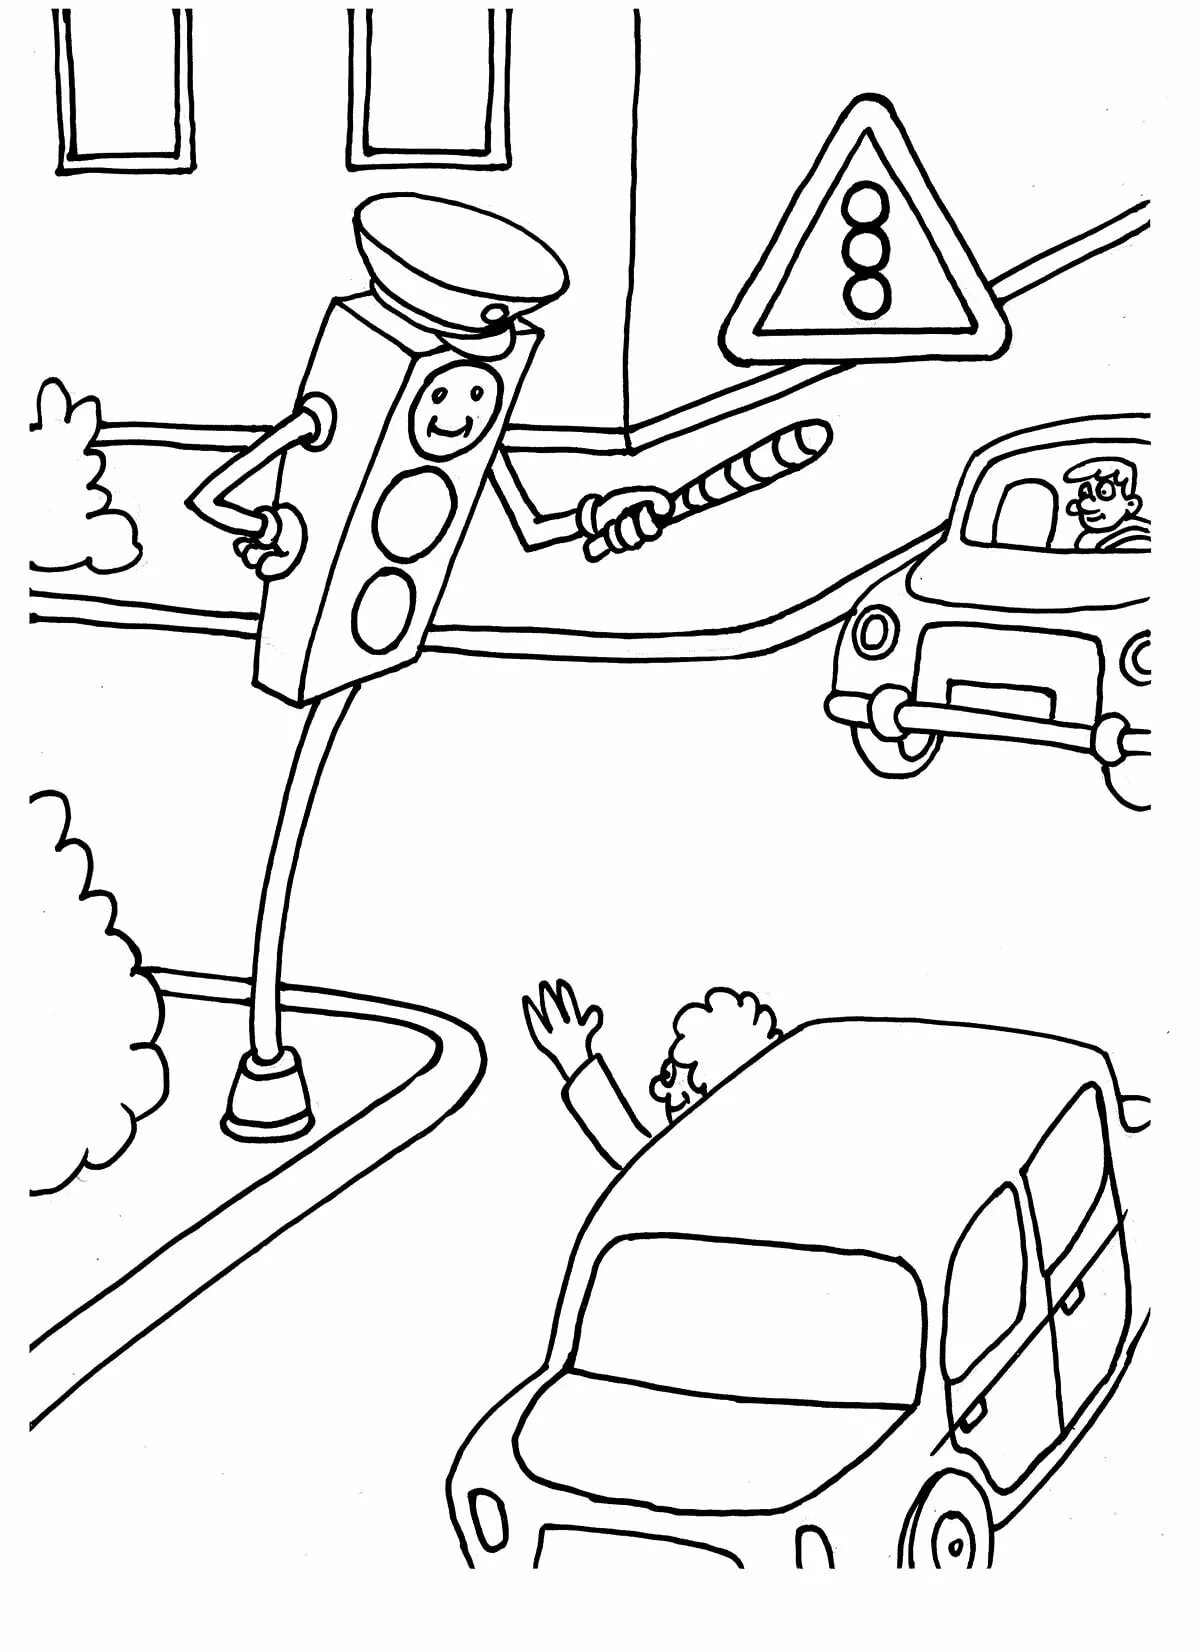 Drawing traffic rules class 2 #16